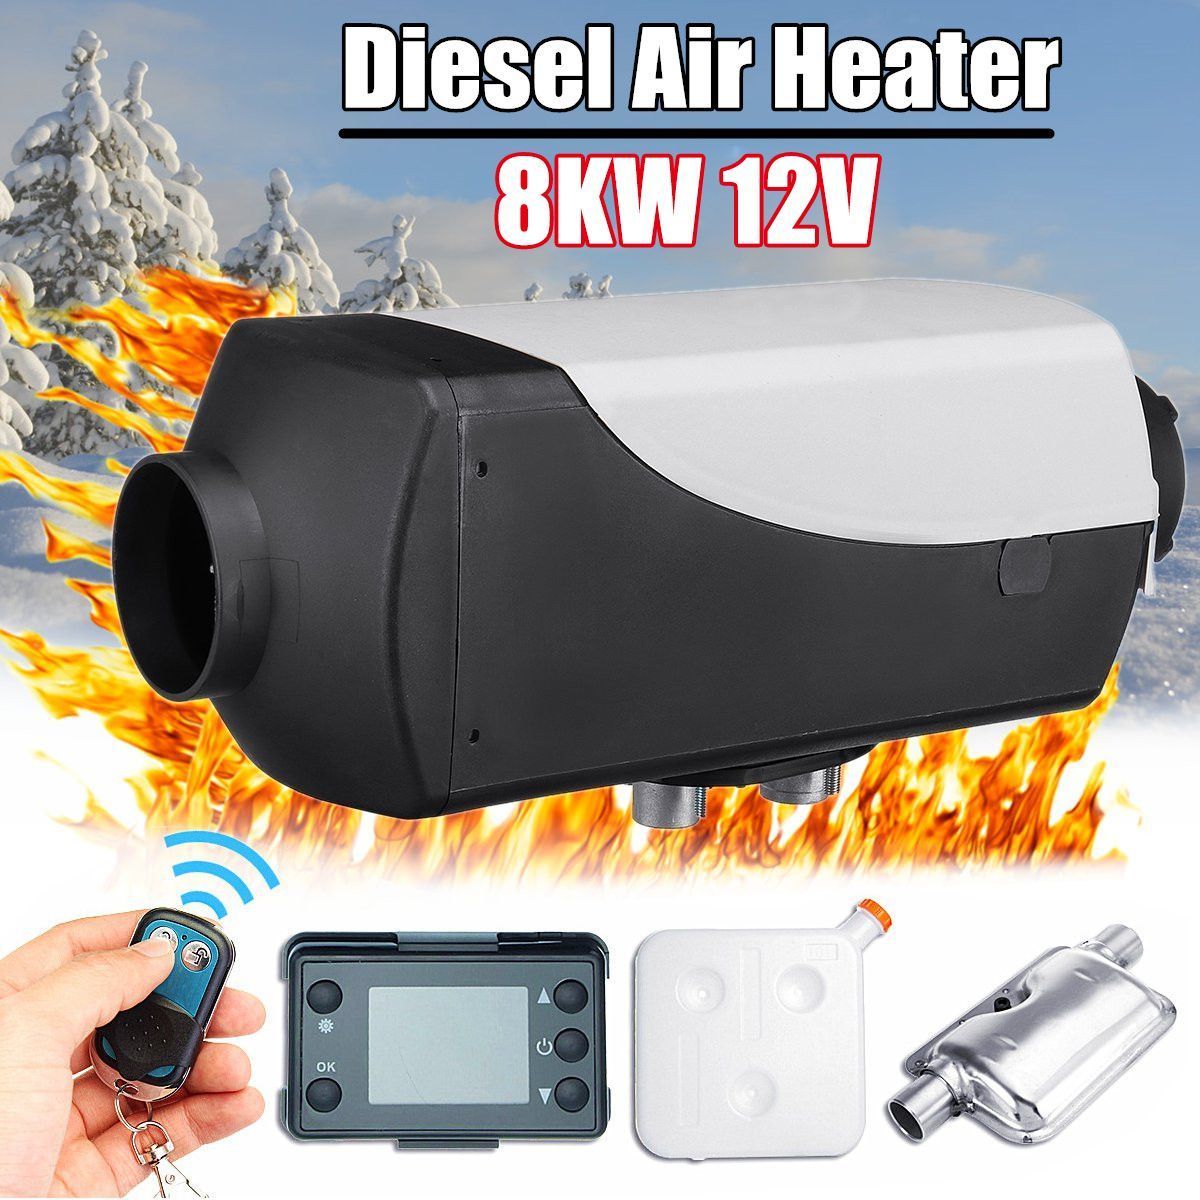 8KW-Remote-Control-12V-LCD-Silencer-Parking-Heater-Air-Parking-Heating-Machinie-Diesel-Air-Heater-Ki-1461635